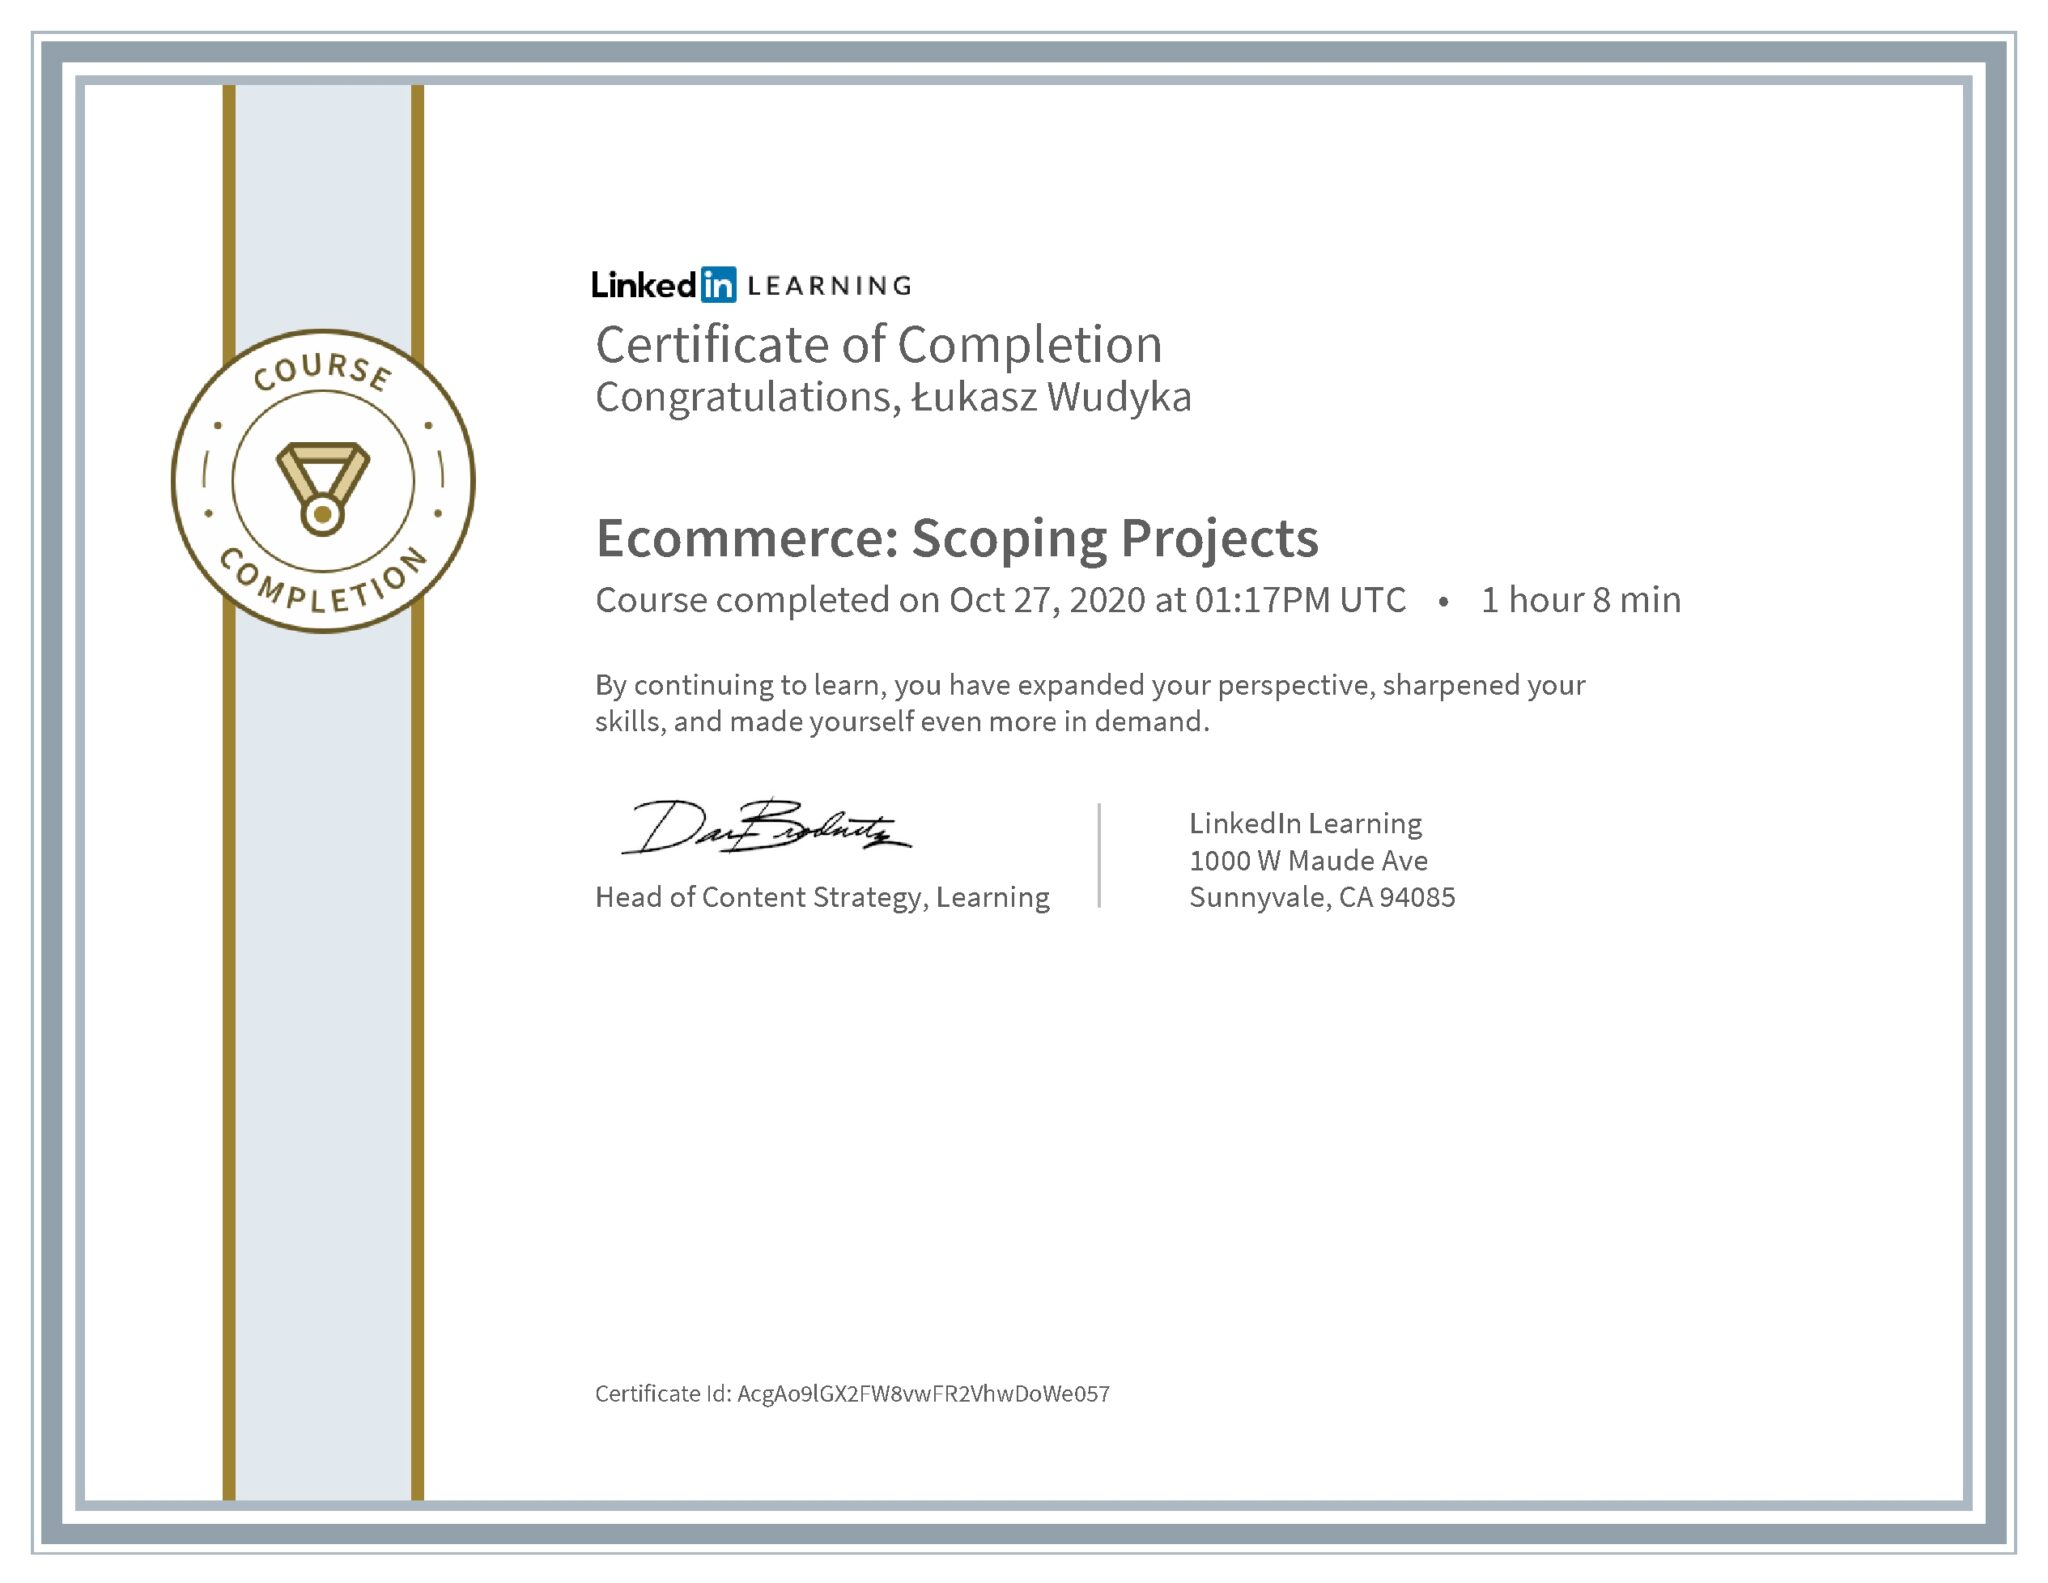 Łukasz Wudyka certyfikat LinkedIn Ecommerce: Scoping Projects